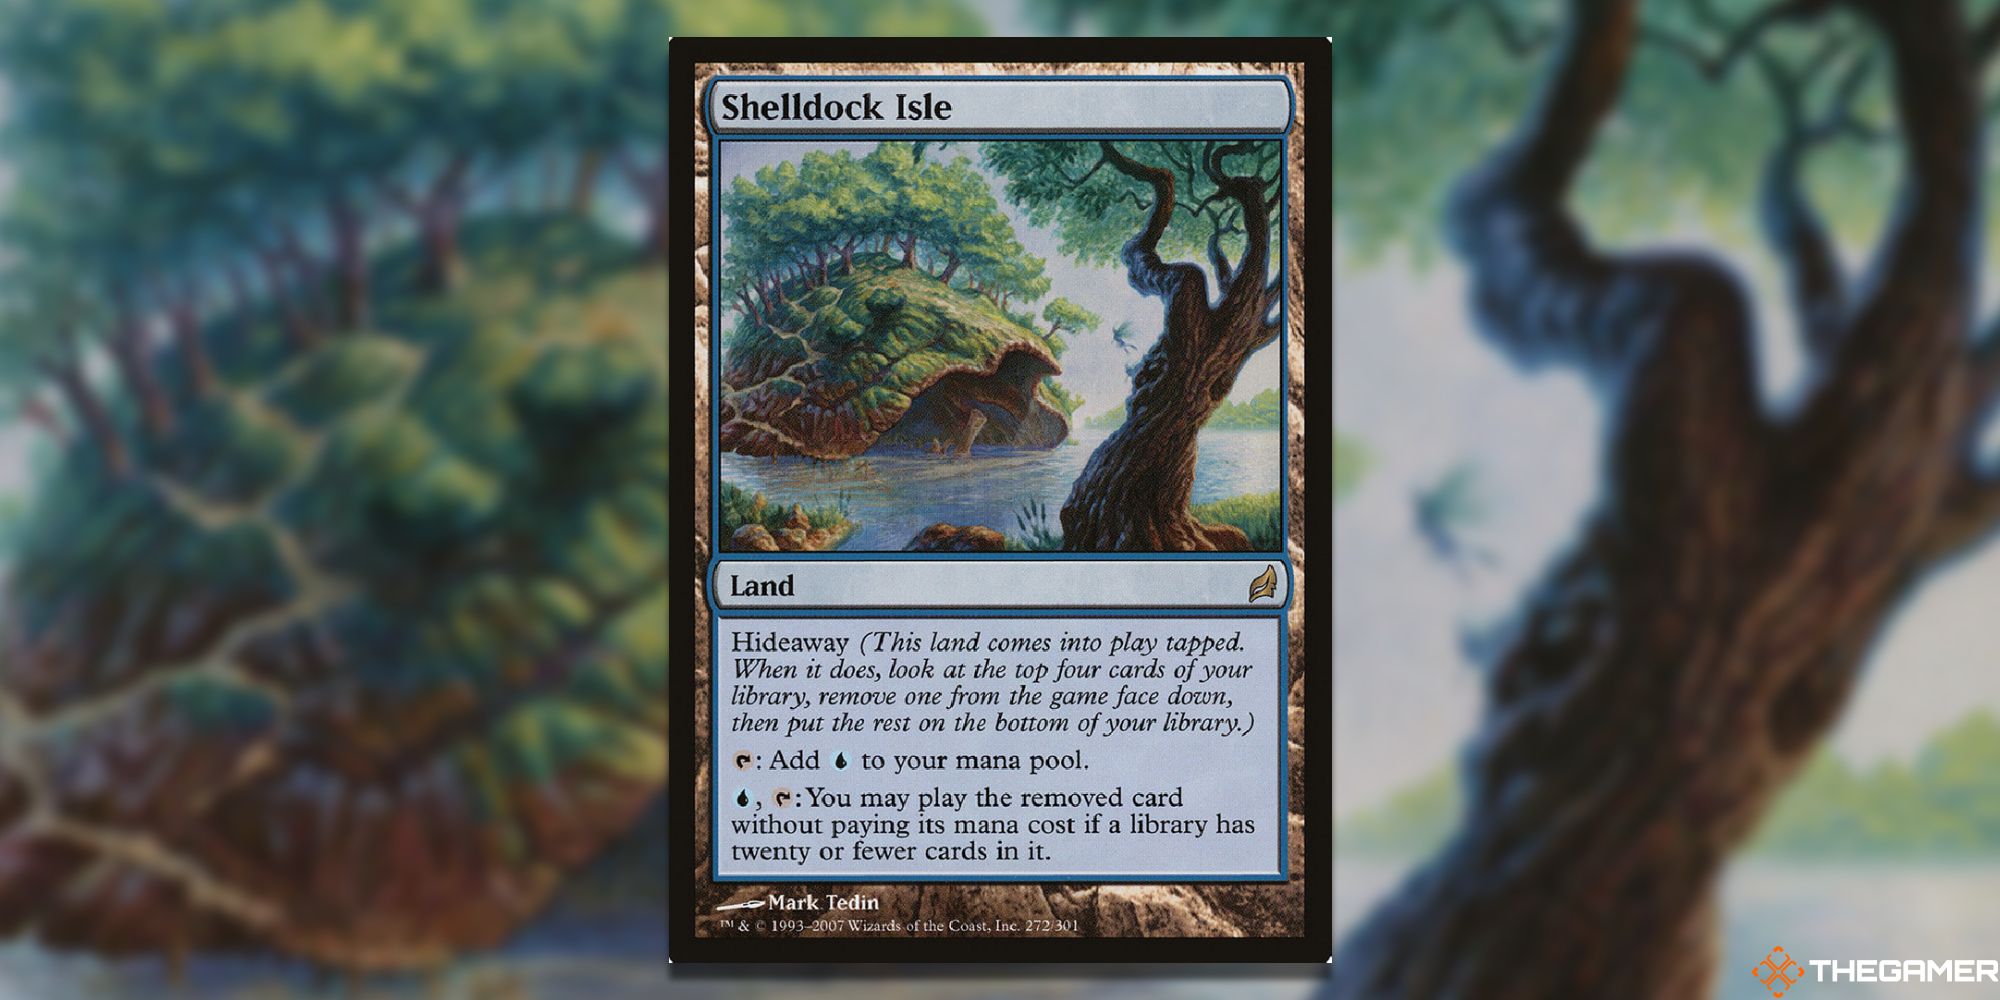 Shelldock Isle full card with background